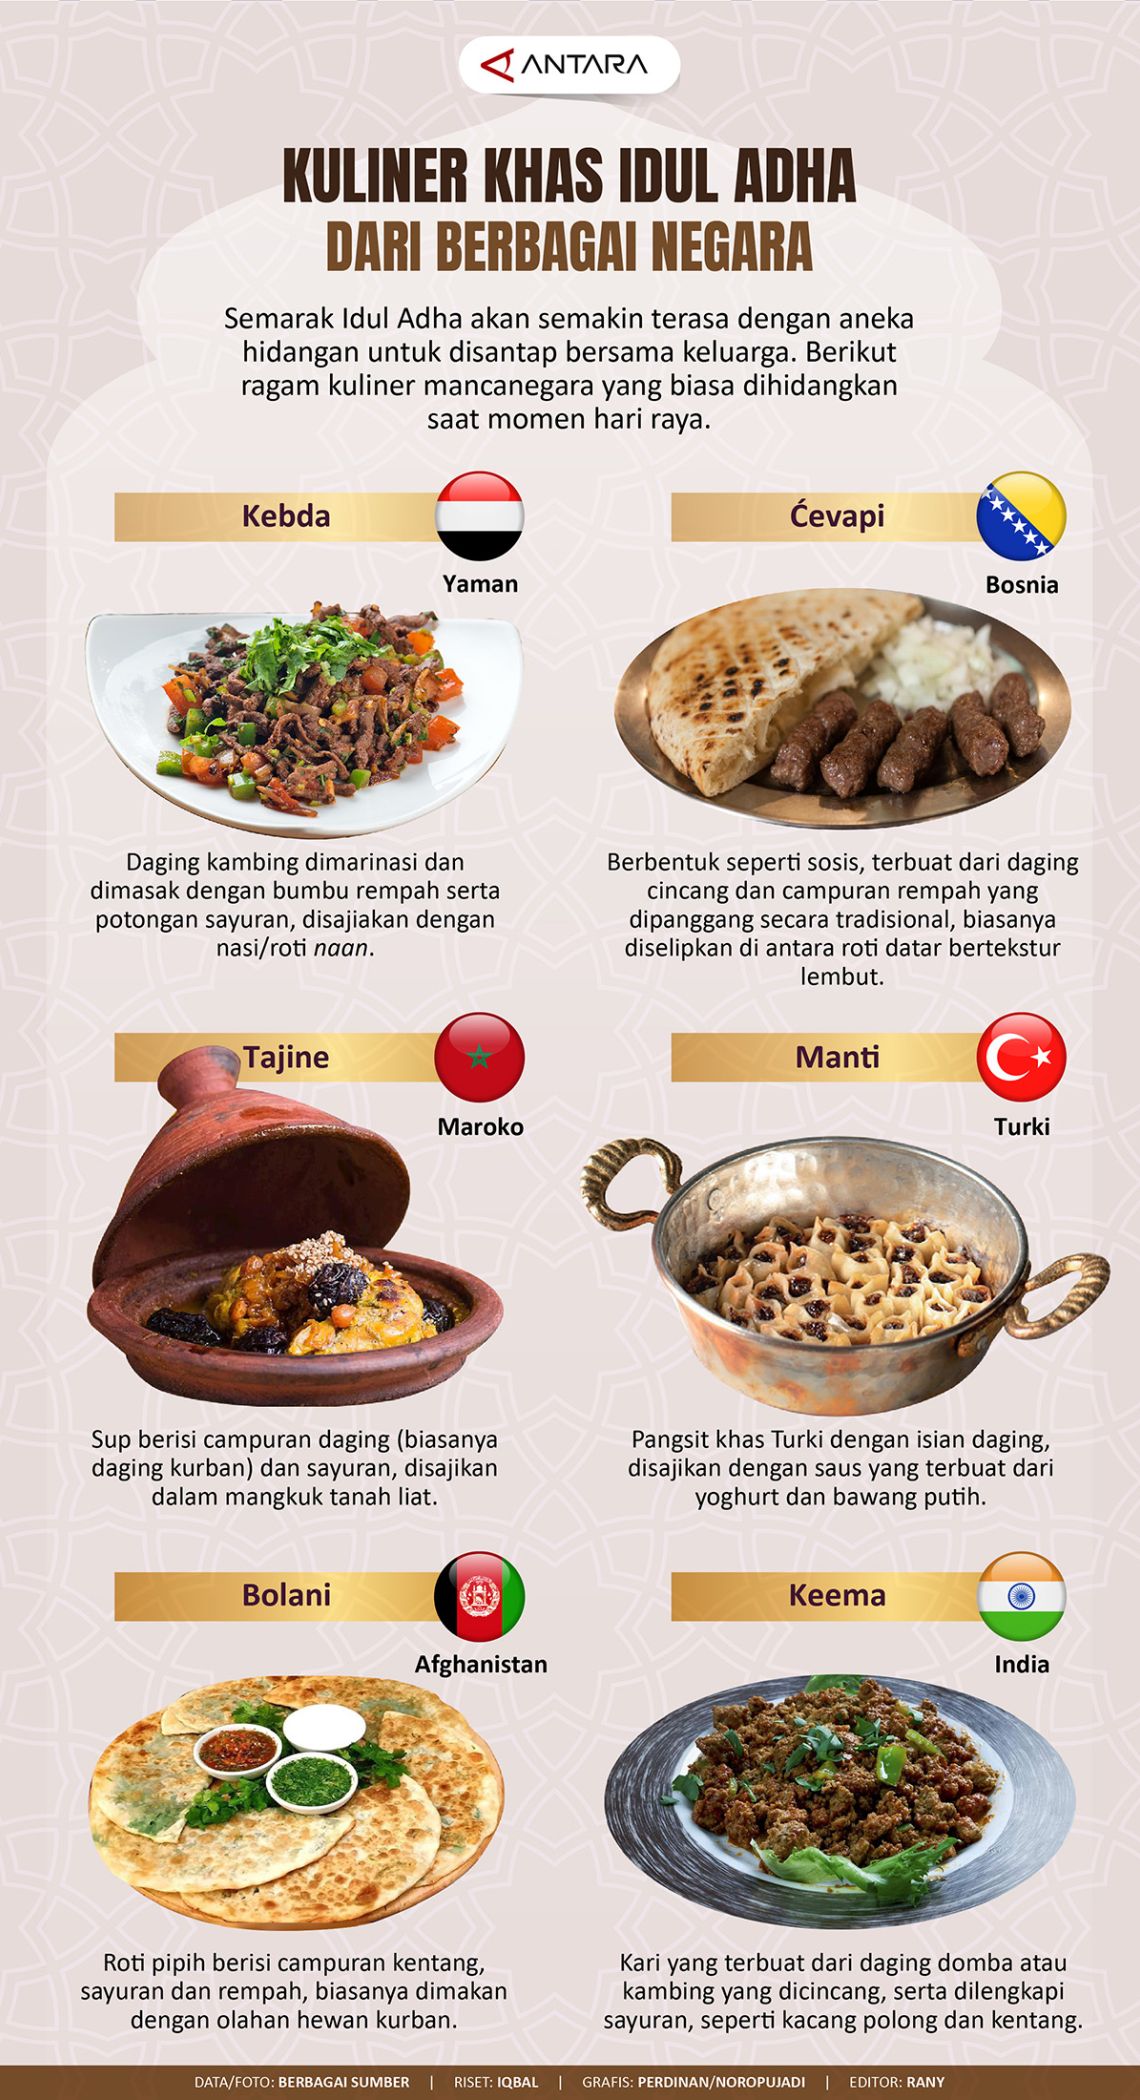 Kuliner khas Idul Adha dari berbagai negara